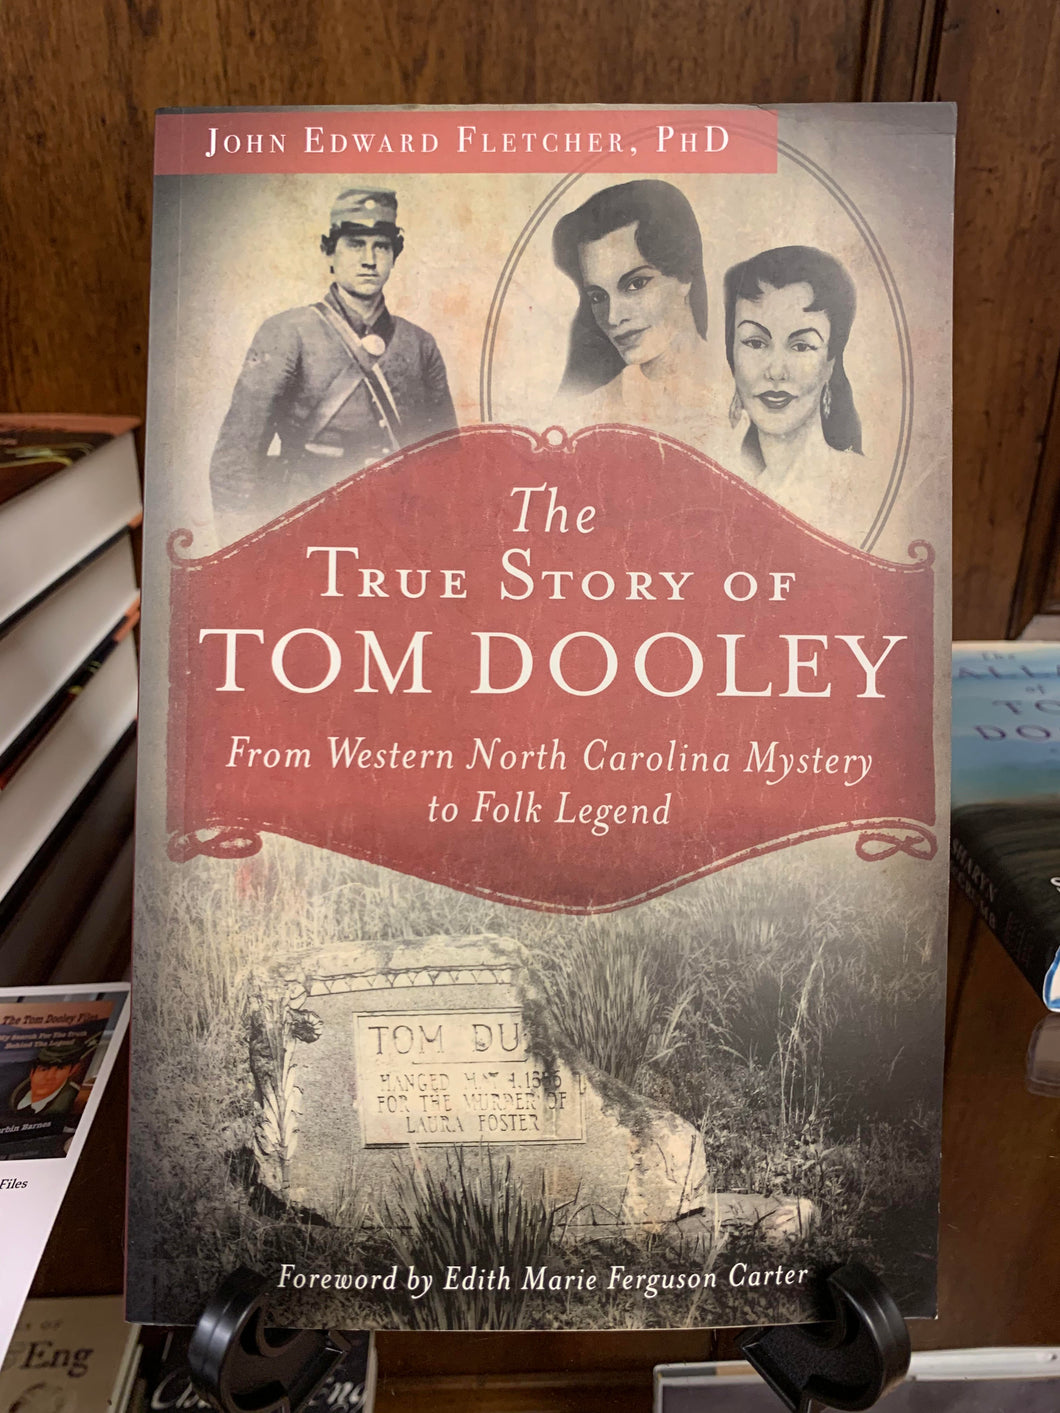 The True Story of Tom Dooley: From Western North Carolina Mystery to Folk Legend by John Edward Fletcher, PhD.